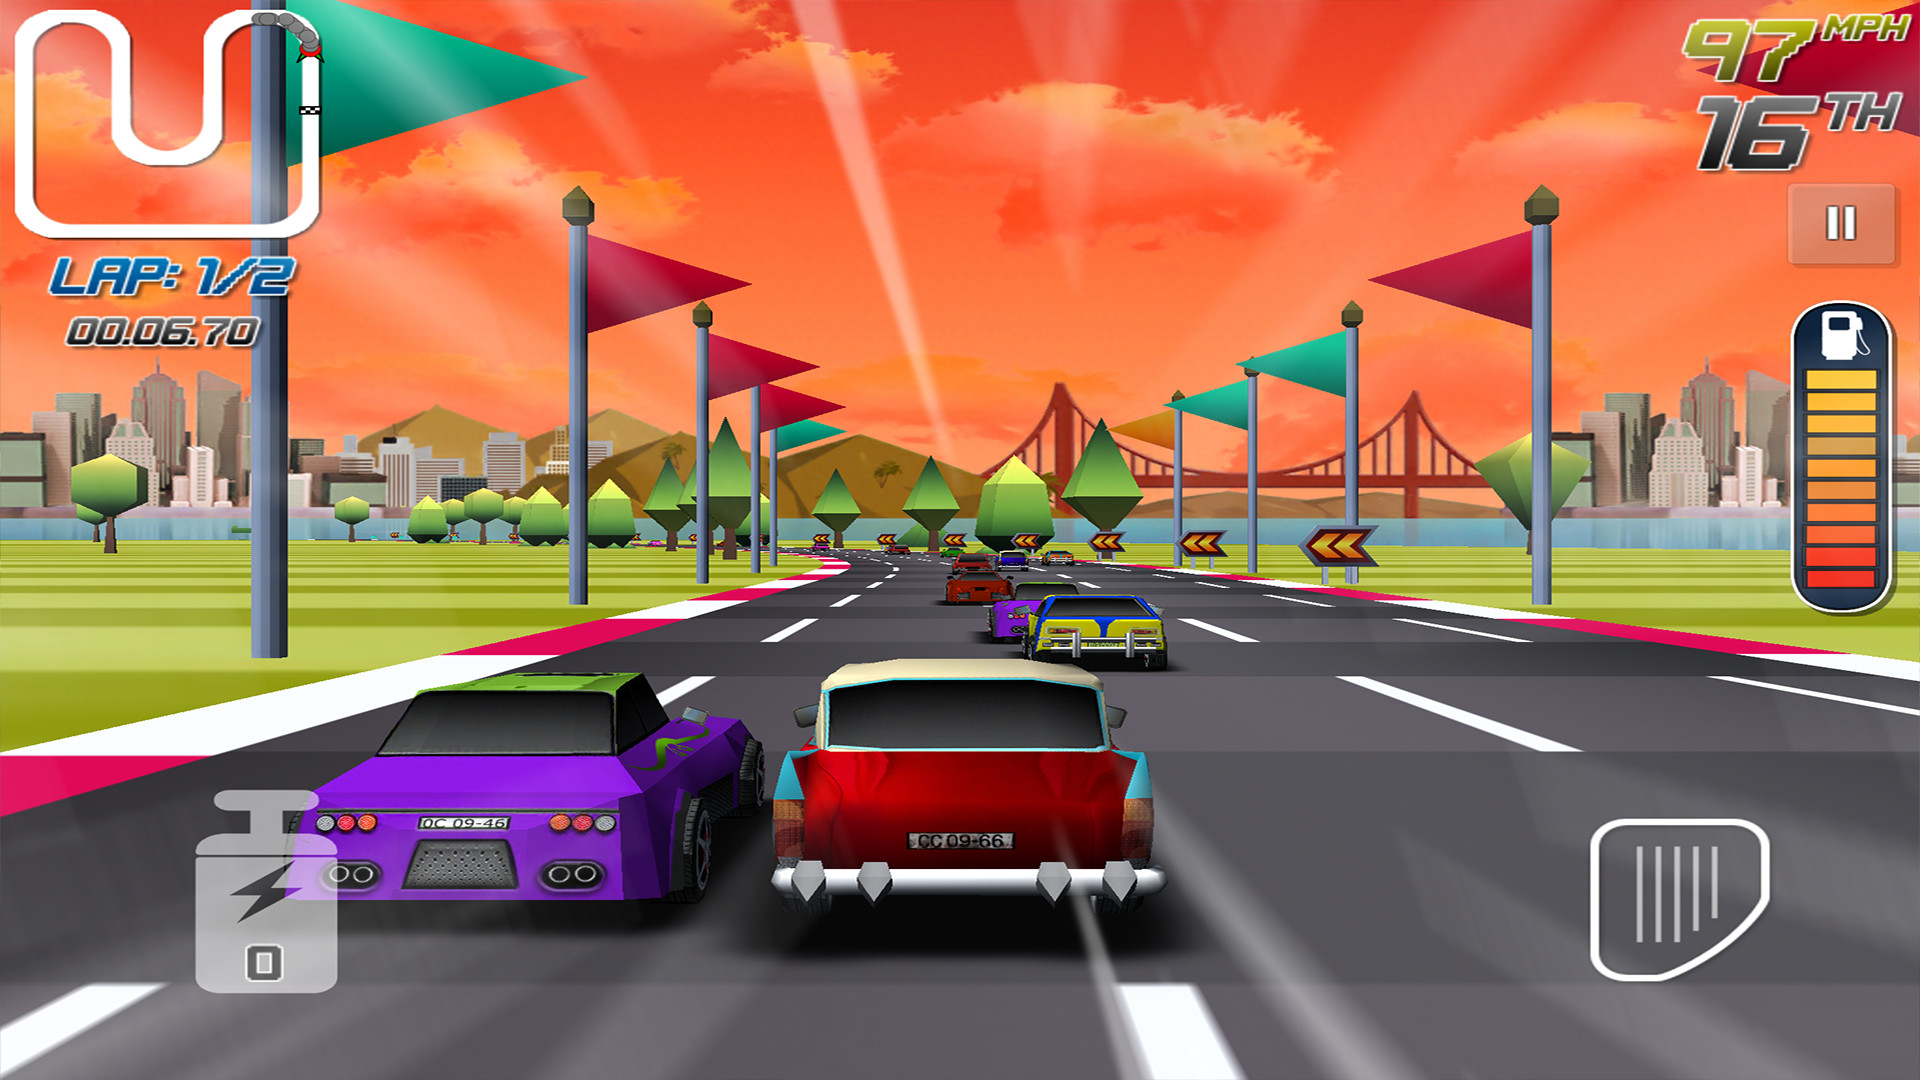 Race feeling. In a Race игра. Bullrun гонки. Impossible car Stunts Driving - Sport car Racing Simulator 2021 - Android Gameplay. City Racing Retro mobile game.